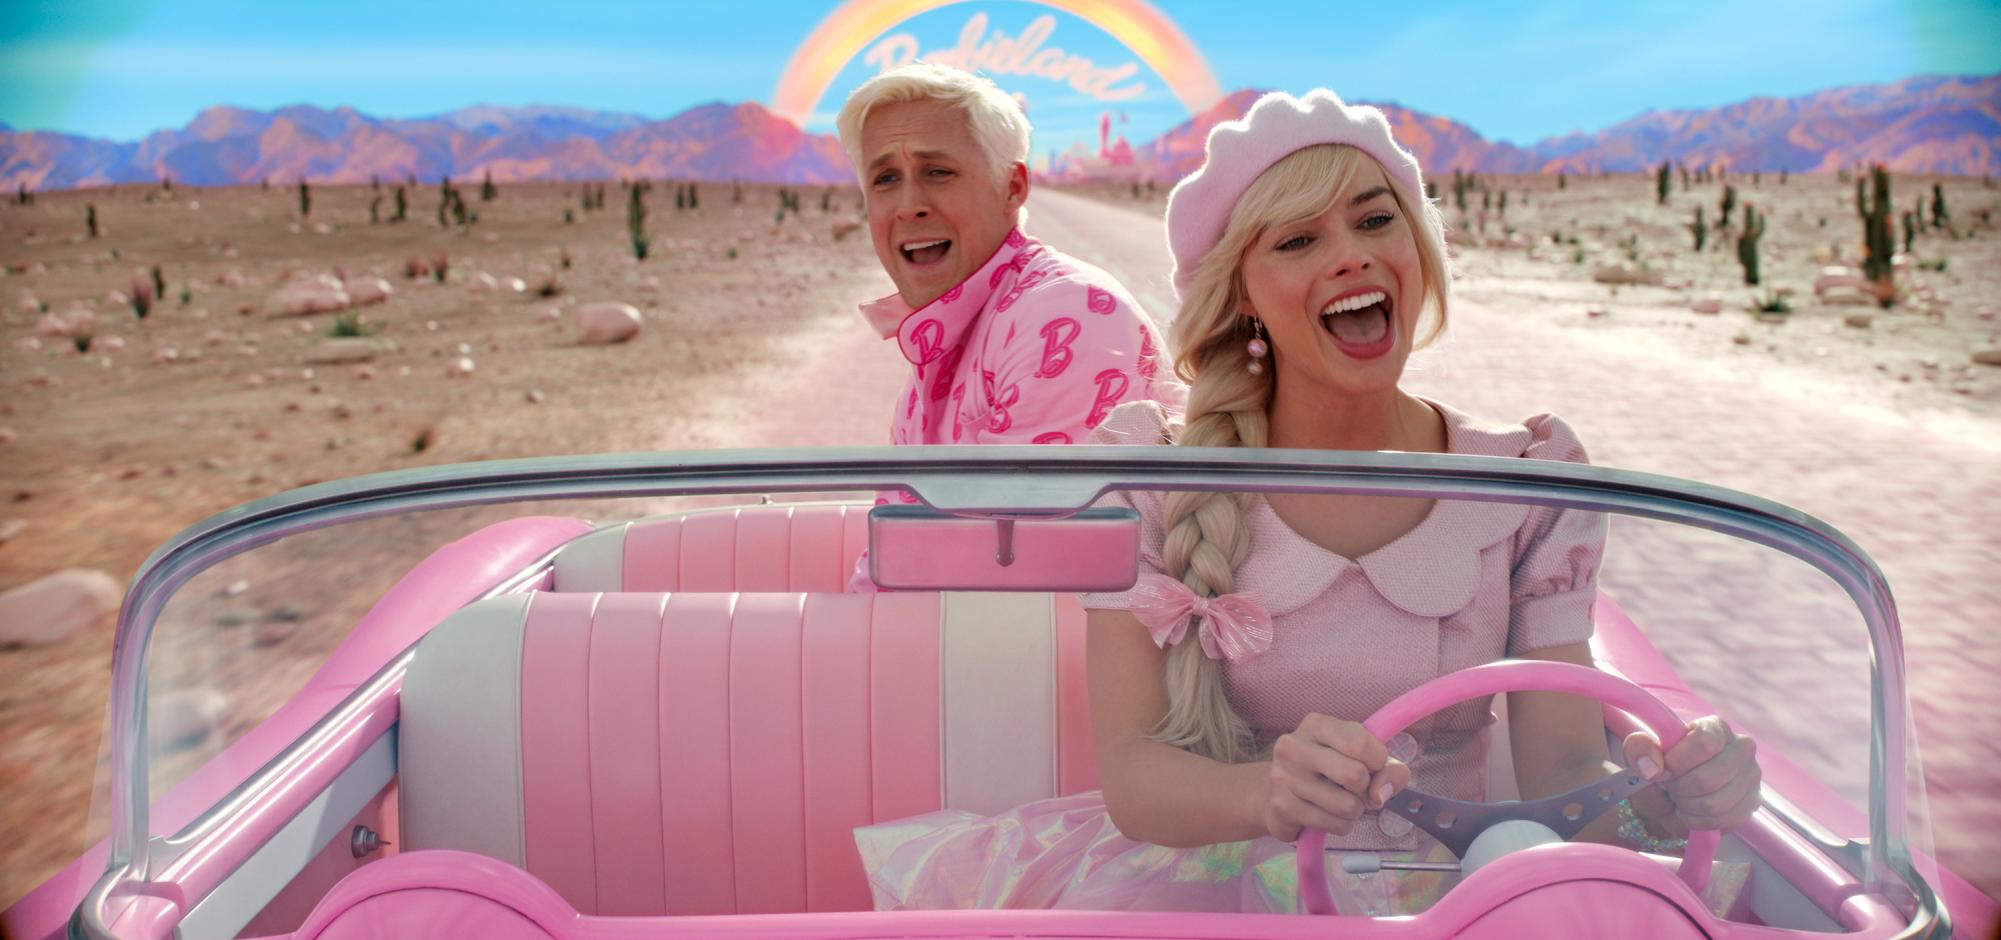 Ryan Gosling, left, and Margot Robbie in “Barbie.” (Courtesy of Warner Bros. Pictures/TNS)